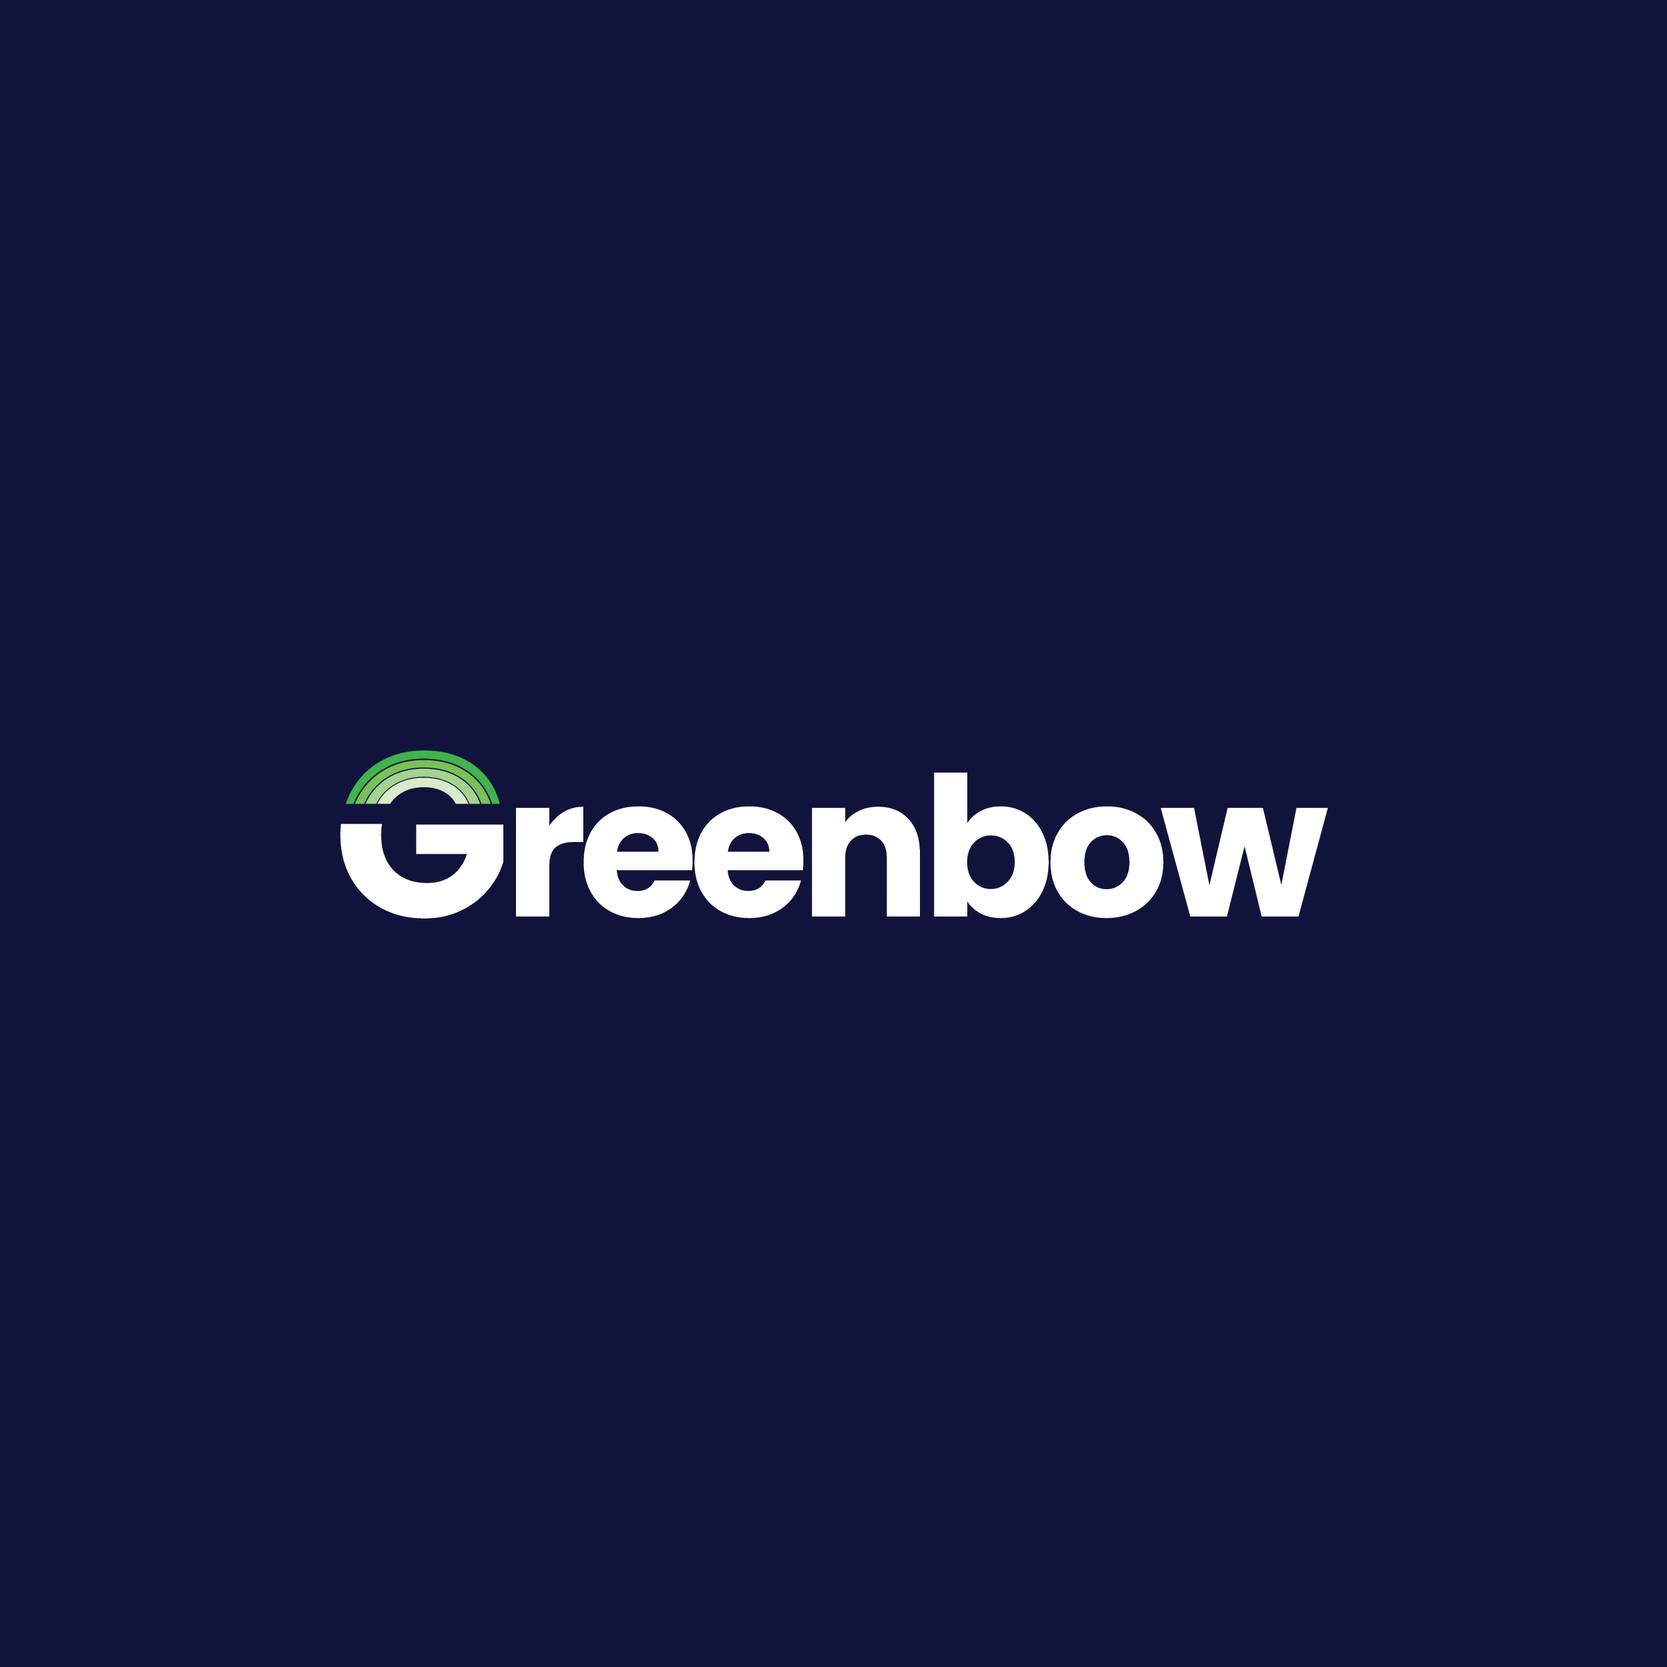 Greenbow logo